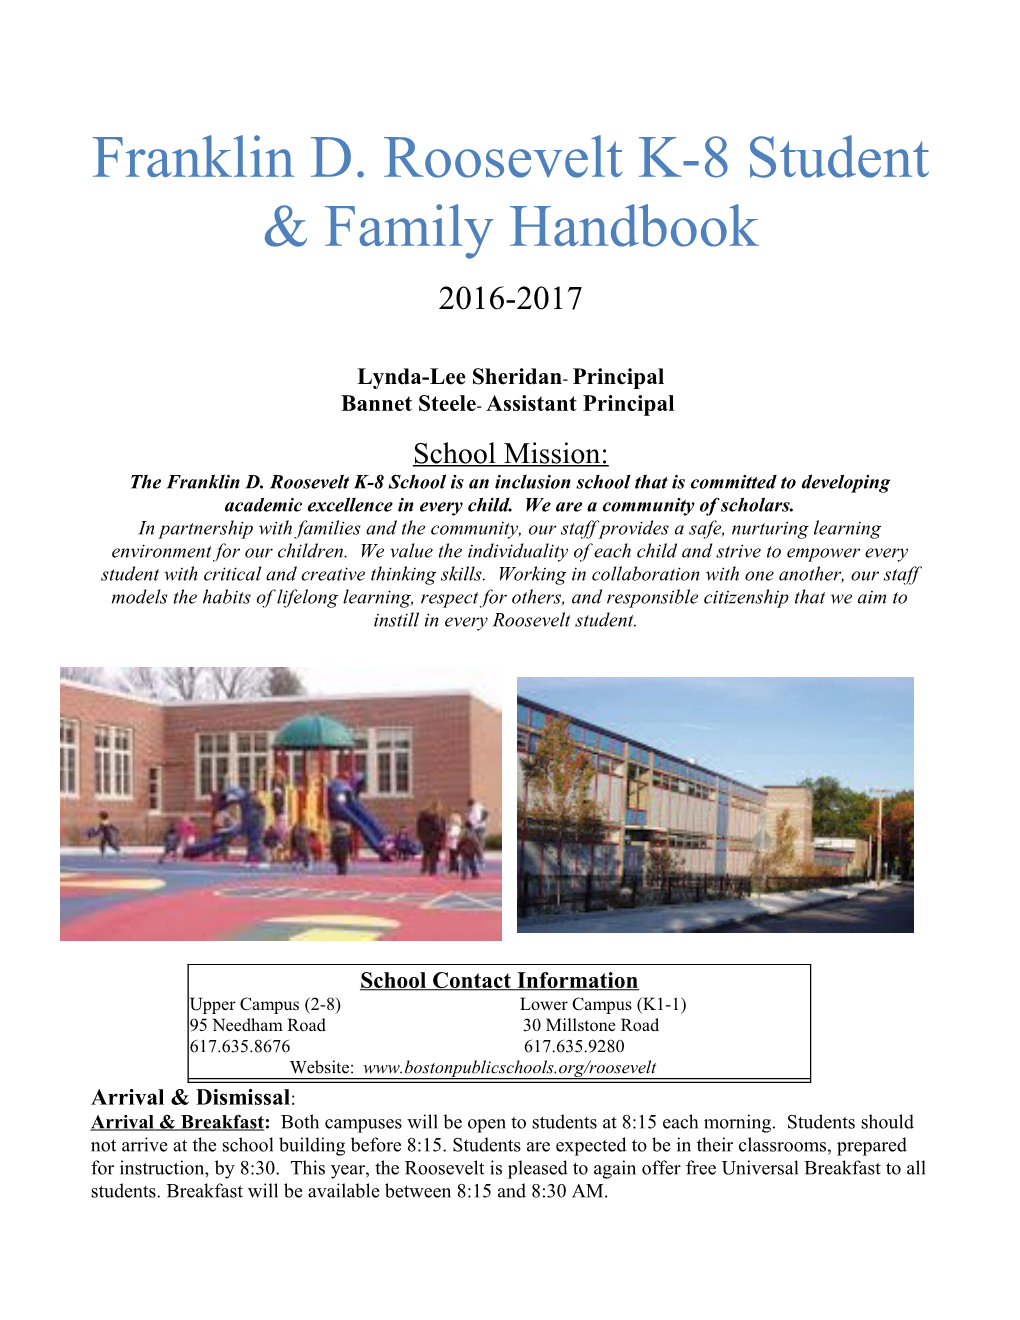 Franklin D. Roosevelt K-8 Student & Family Handbook